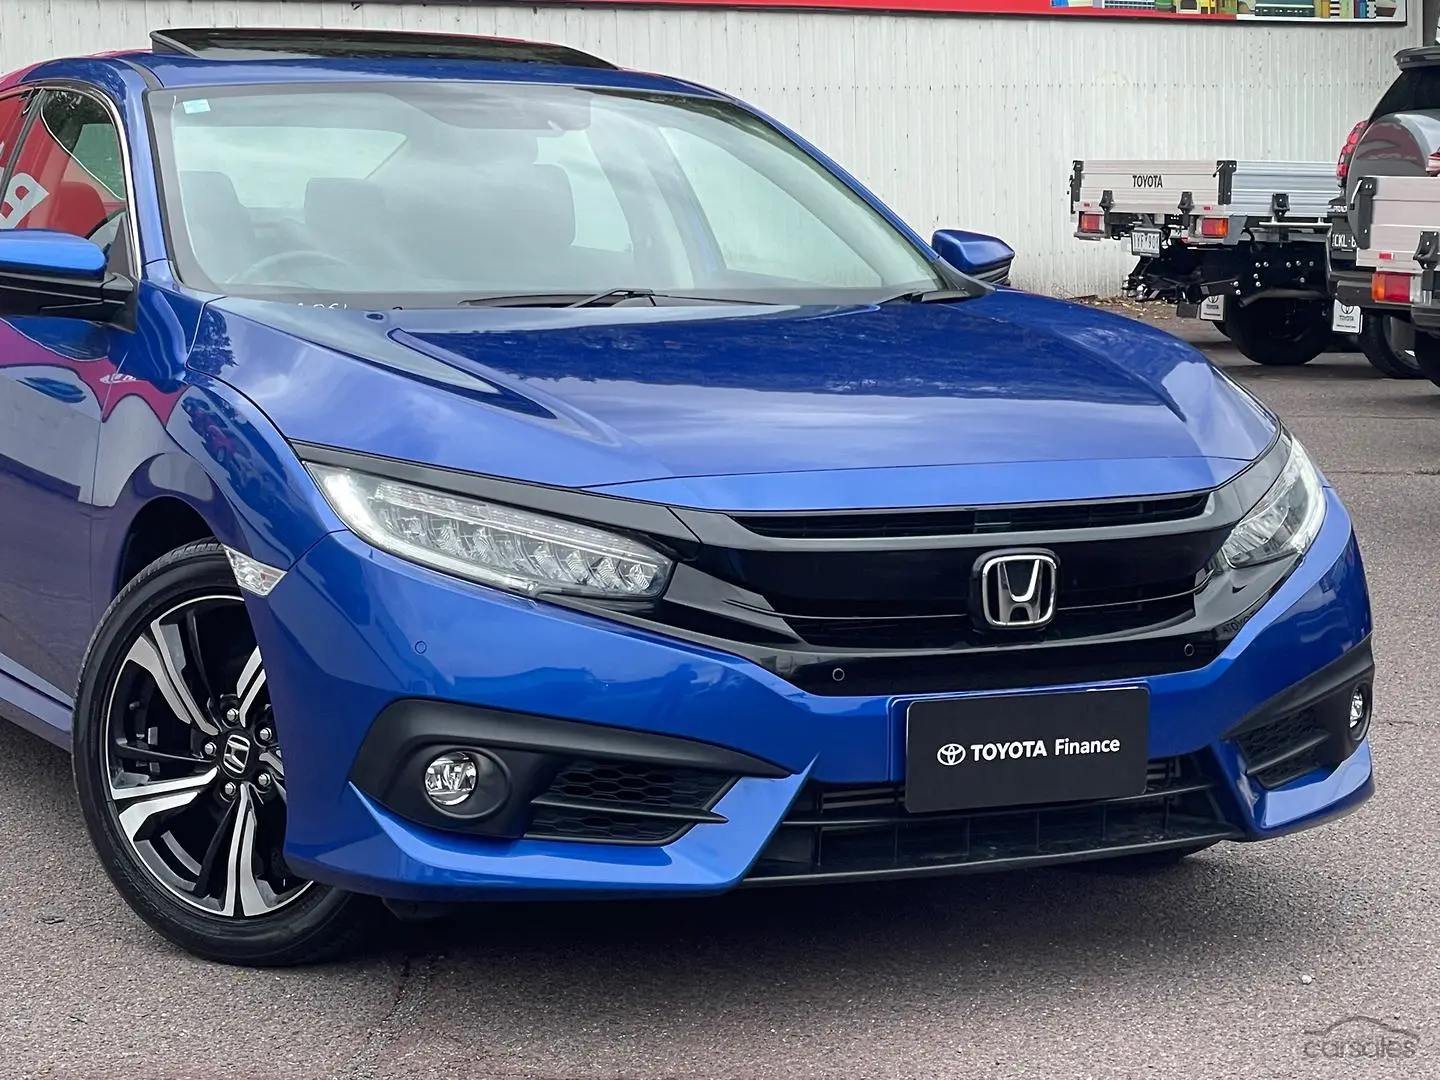 2017 Honda Civic Image 2